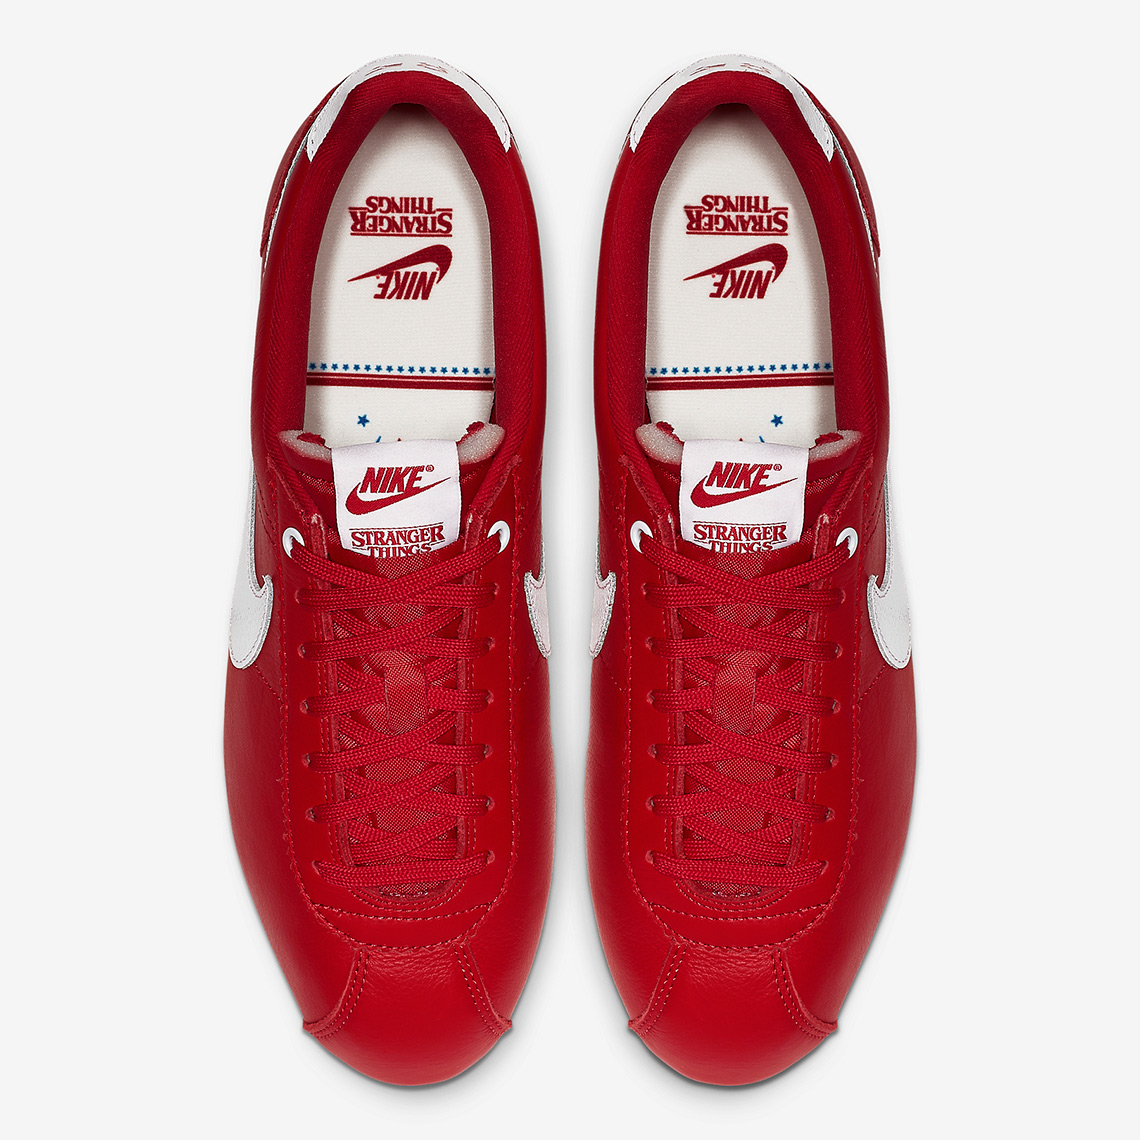 Stranger Things Nike Cortez Red Og Collection Ck1907 600 3